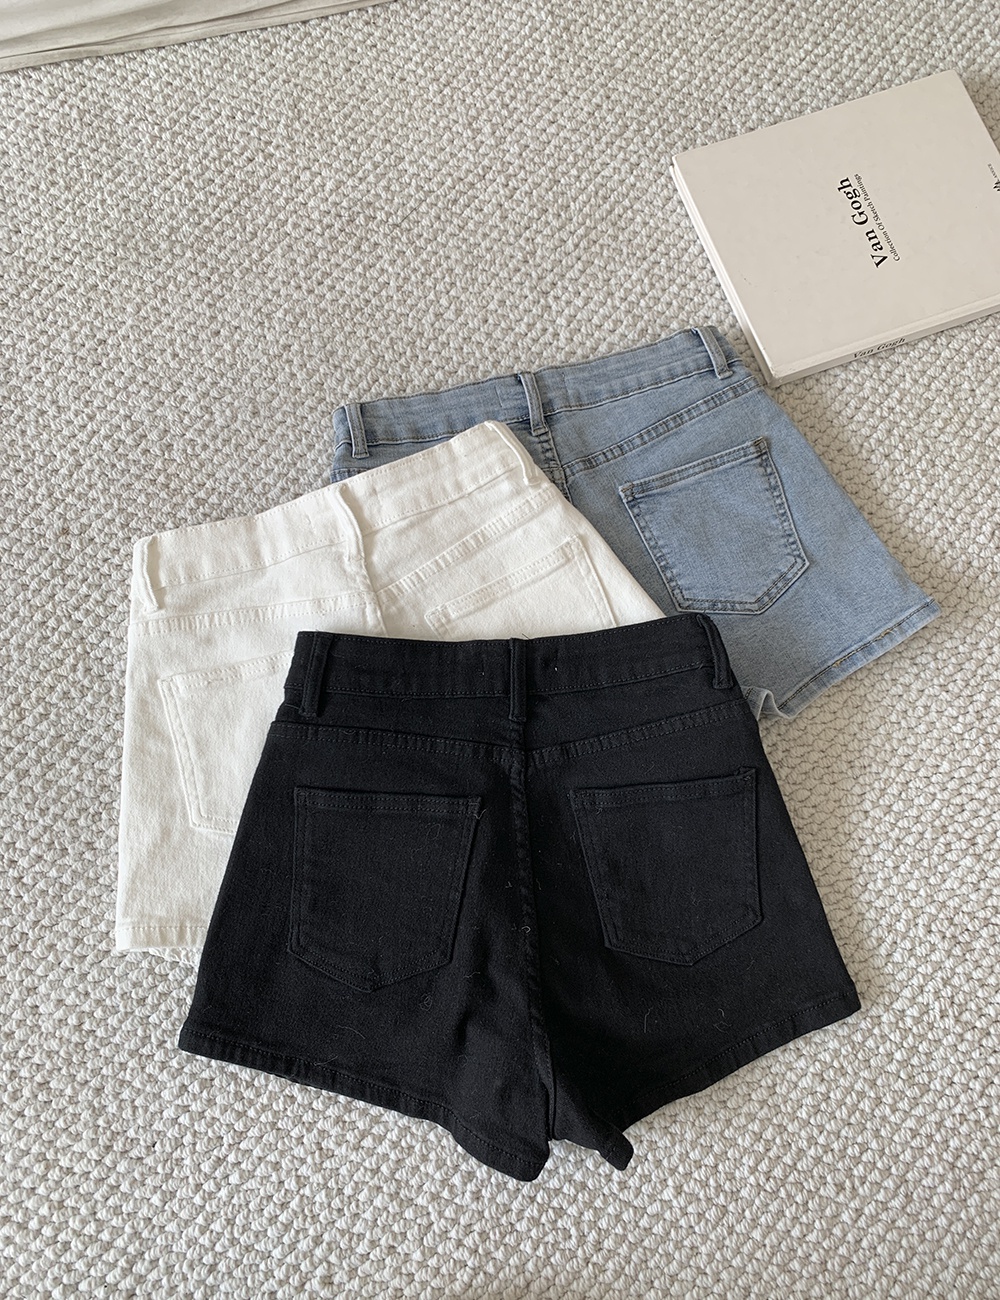 All-match hotties pants A-line short jeans for women